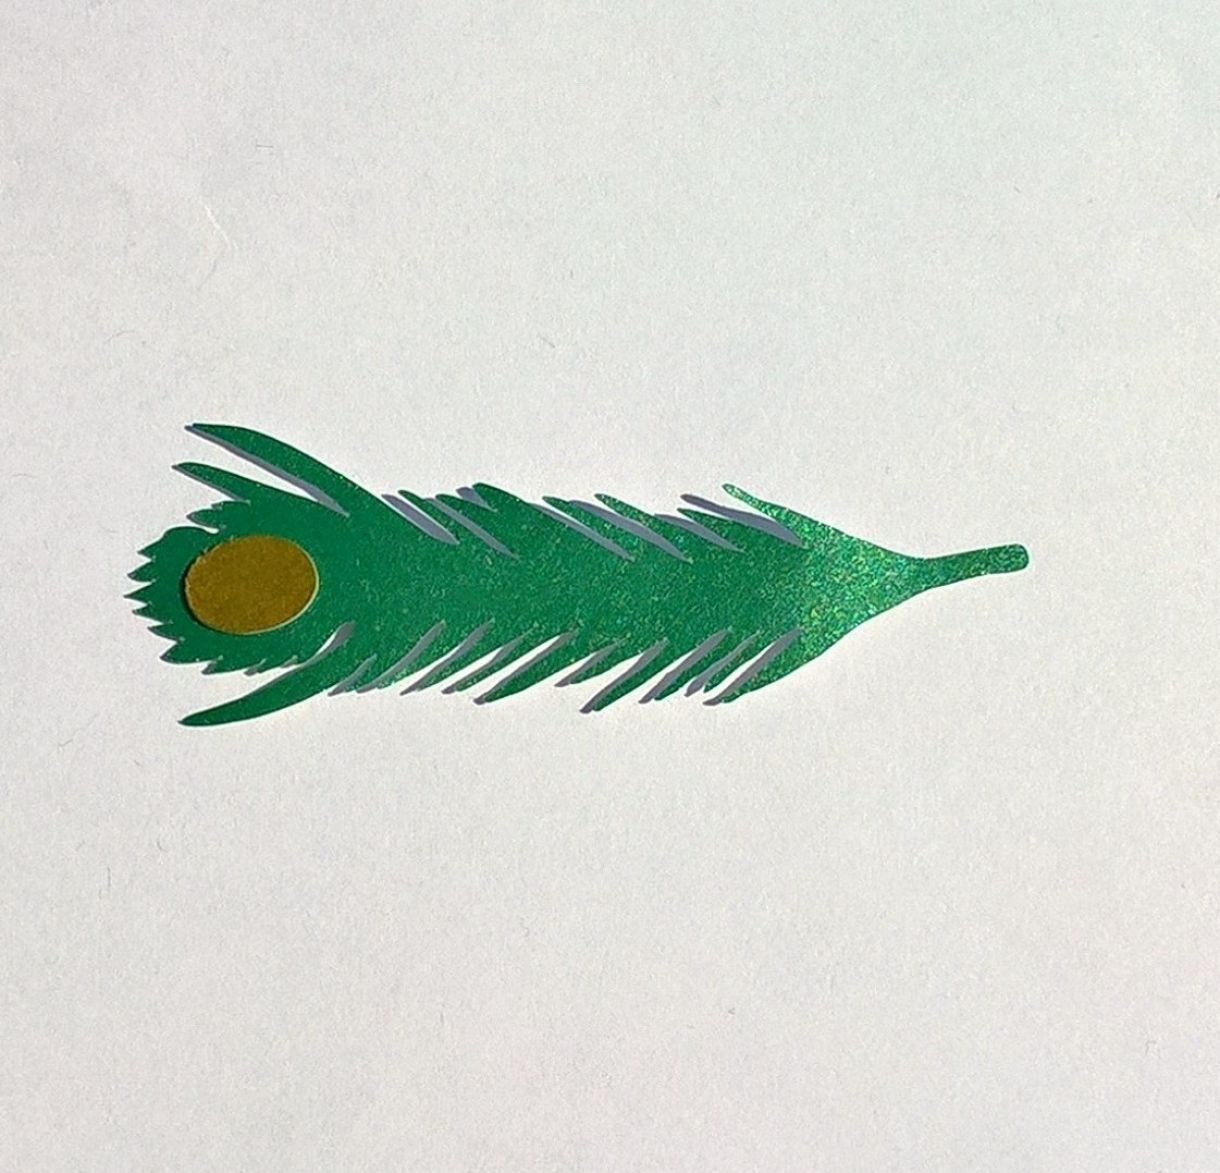 Peacock Image 13